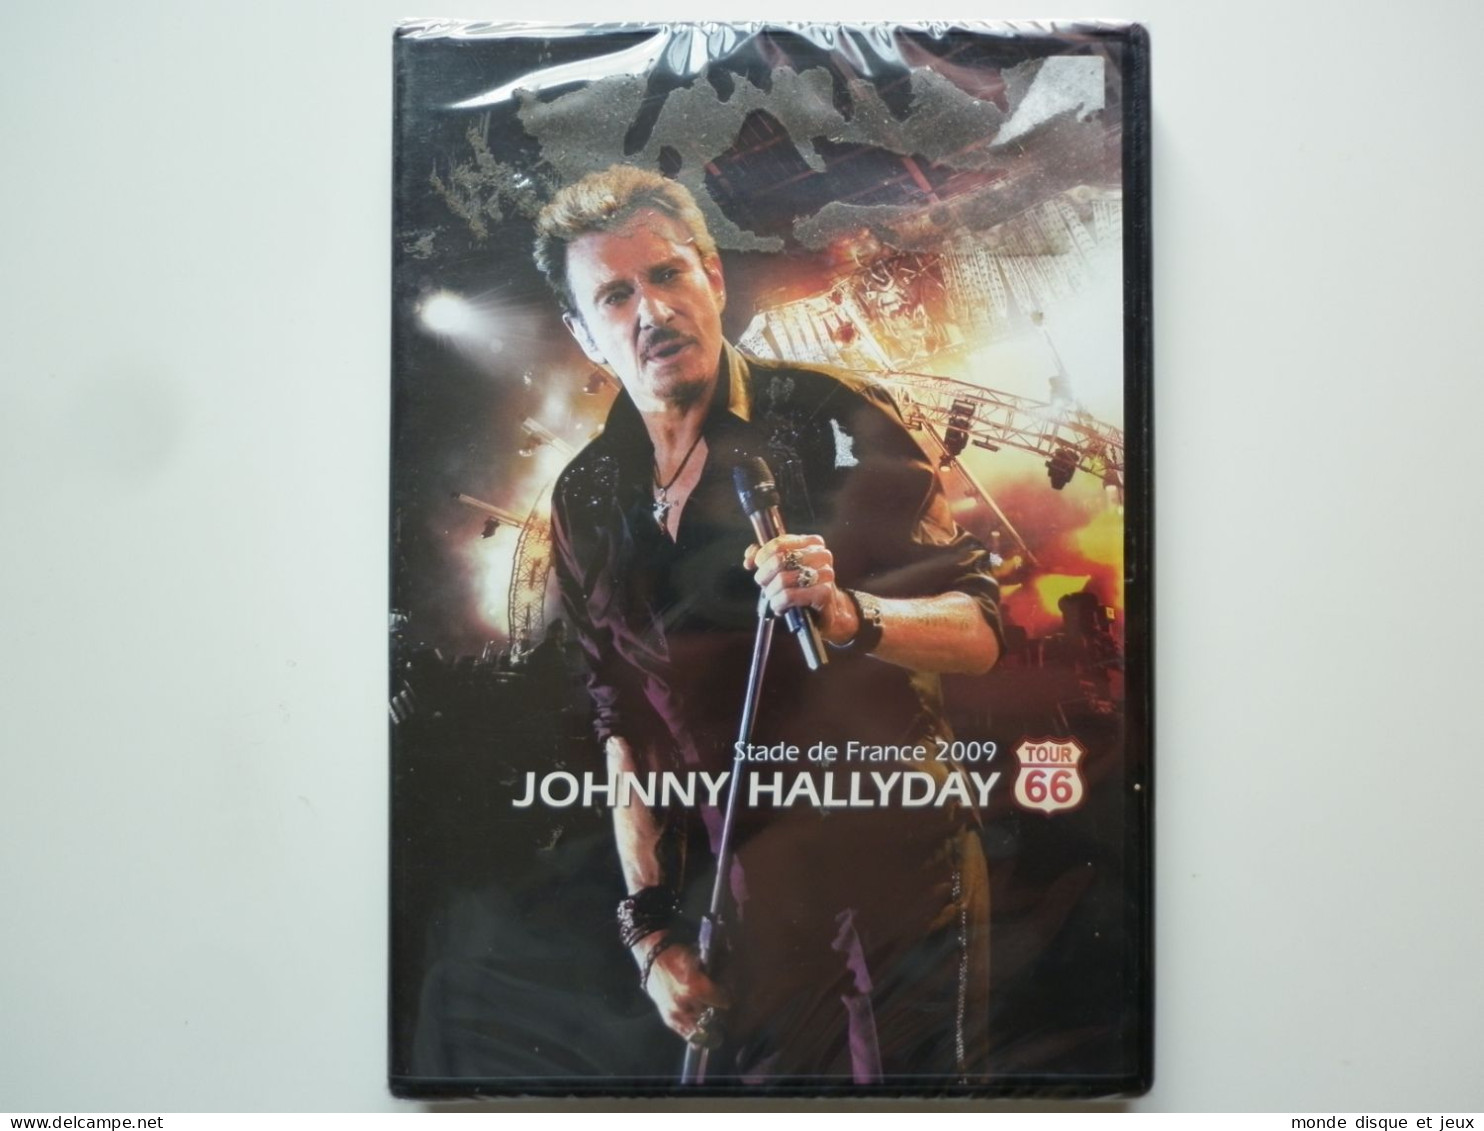 Johnny Hallyday Dvd Stade De France 2009 Tour 66 - DVD Musicali